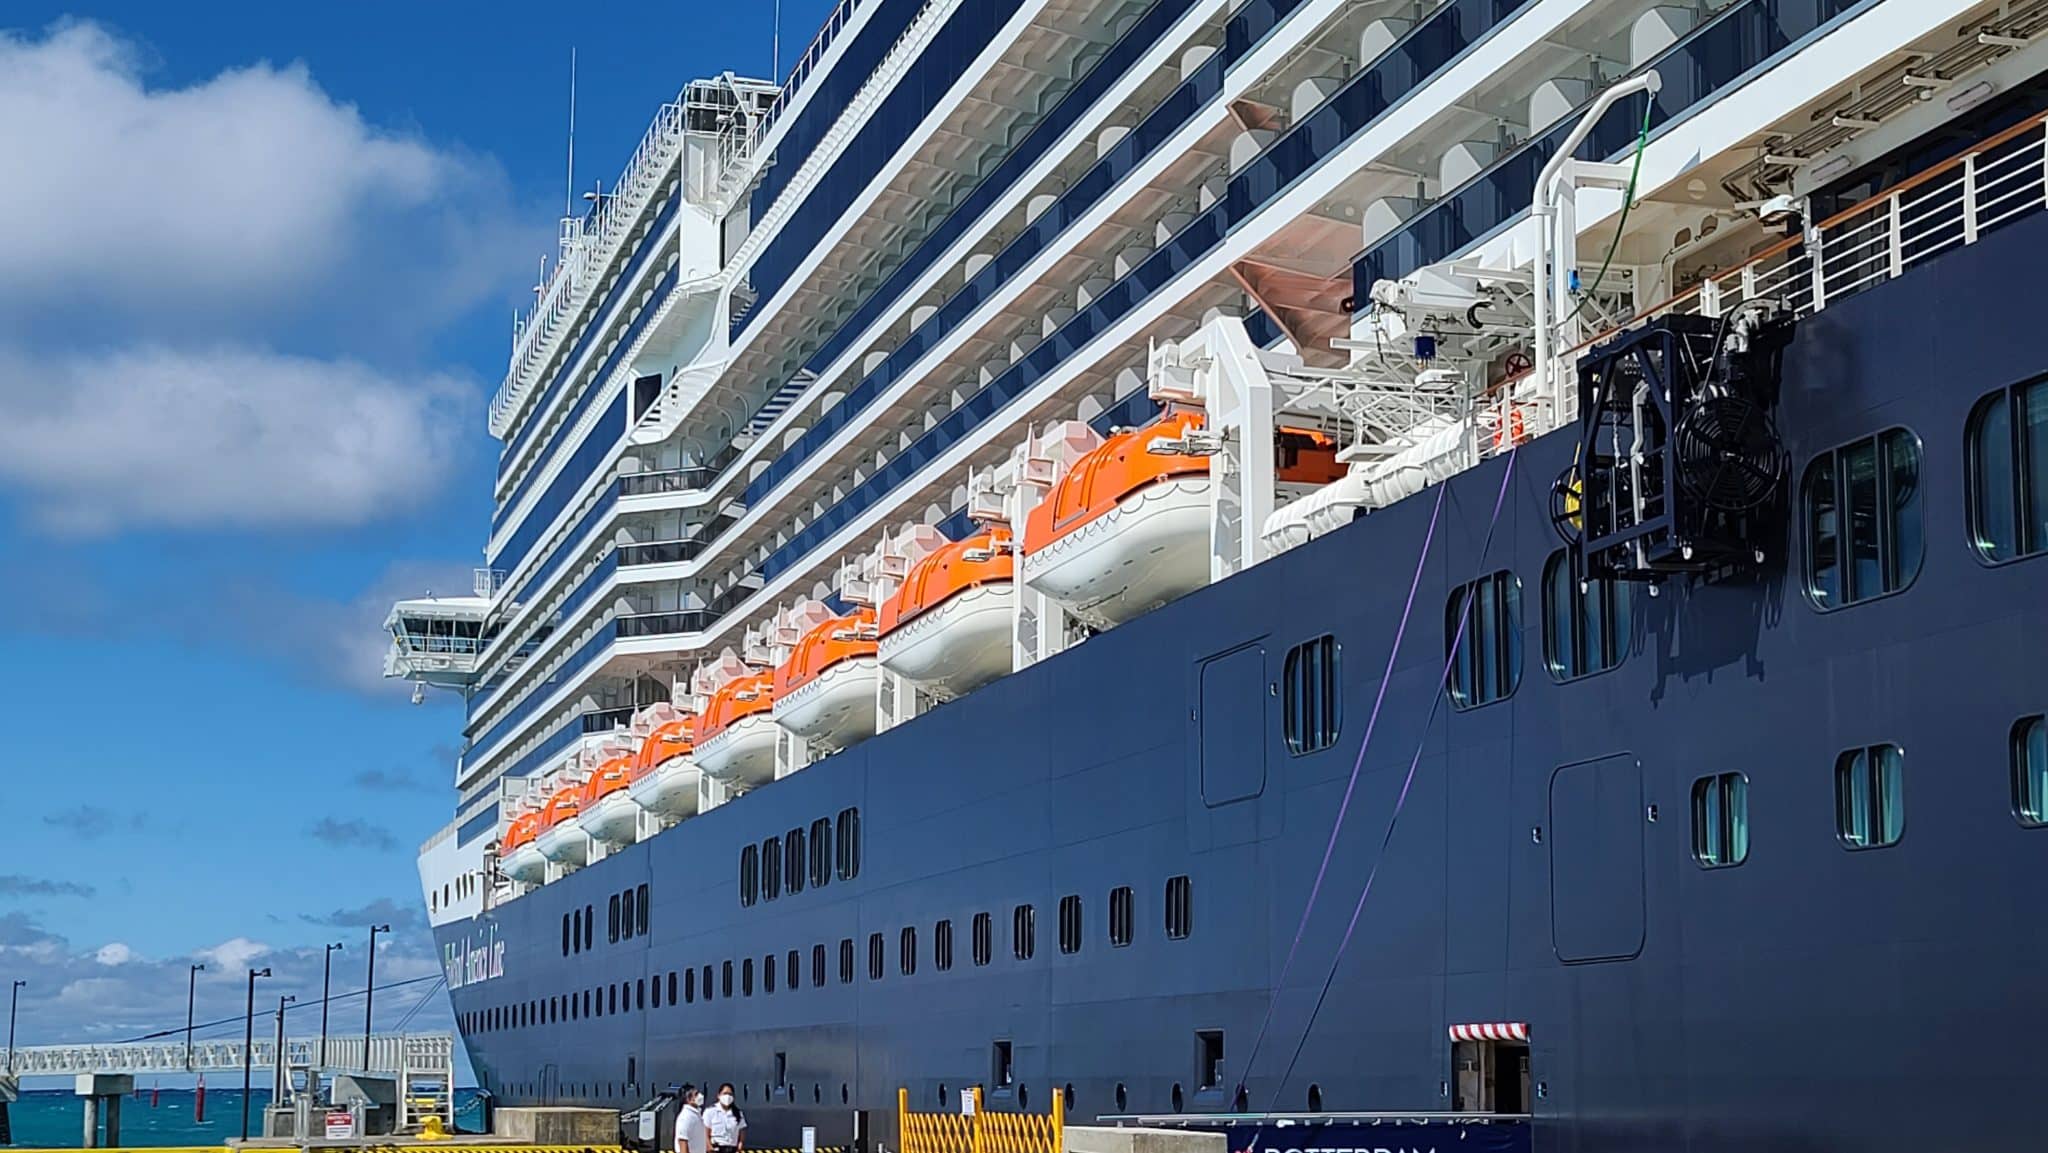 Holland America Line Adds Alaska Cruisetours to Latest
Deals